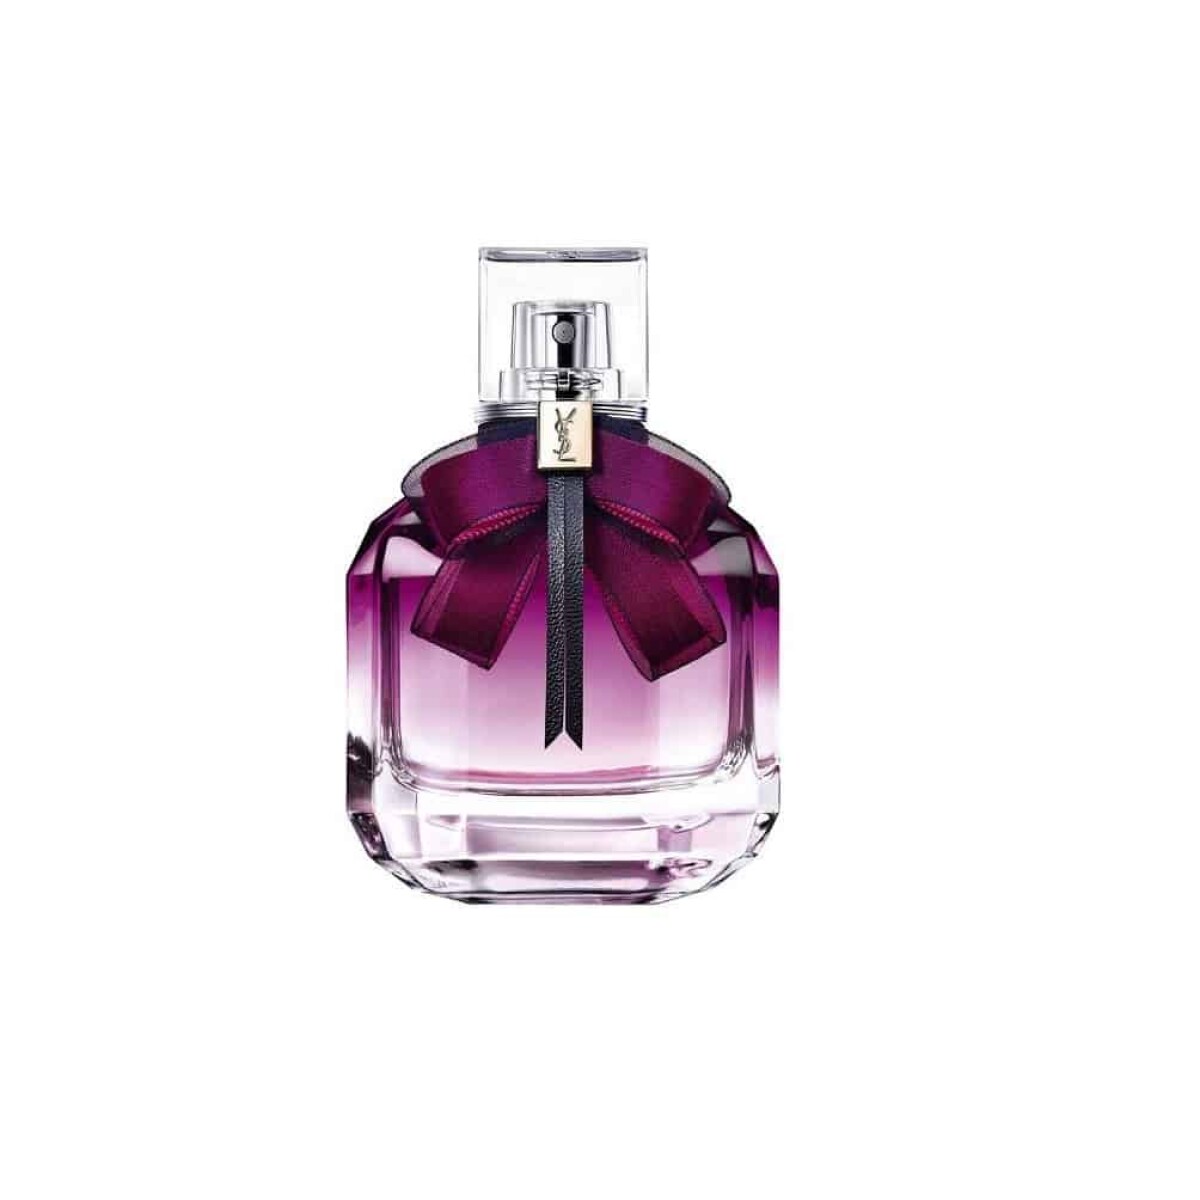 Perfume Ysl Mon Paris Intensement Edp 30 ml 